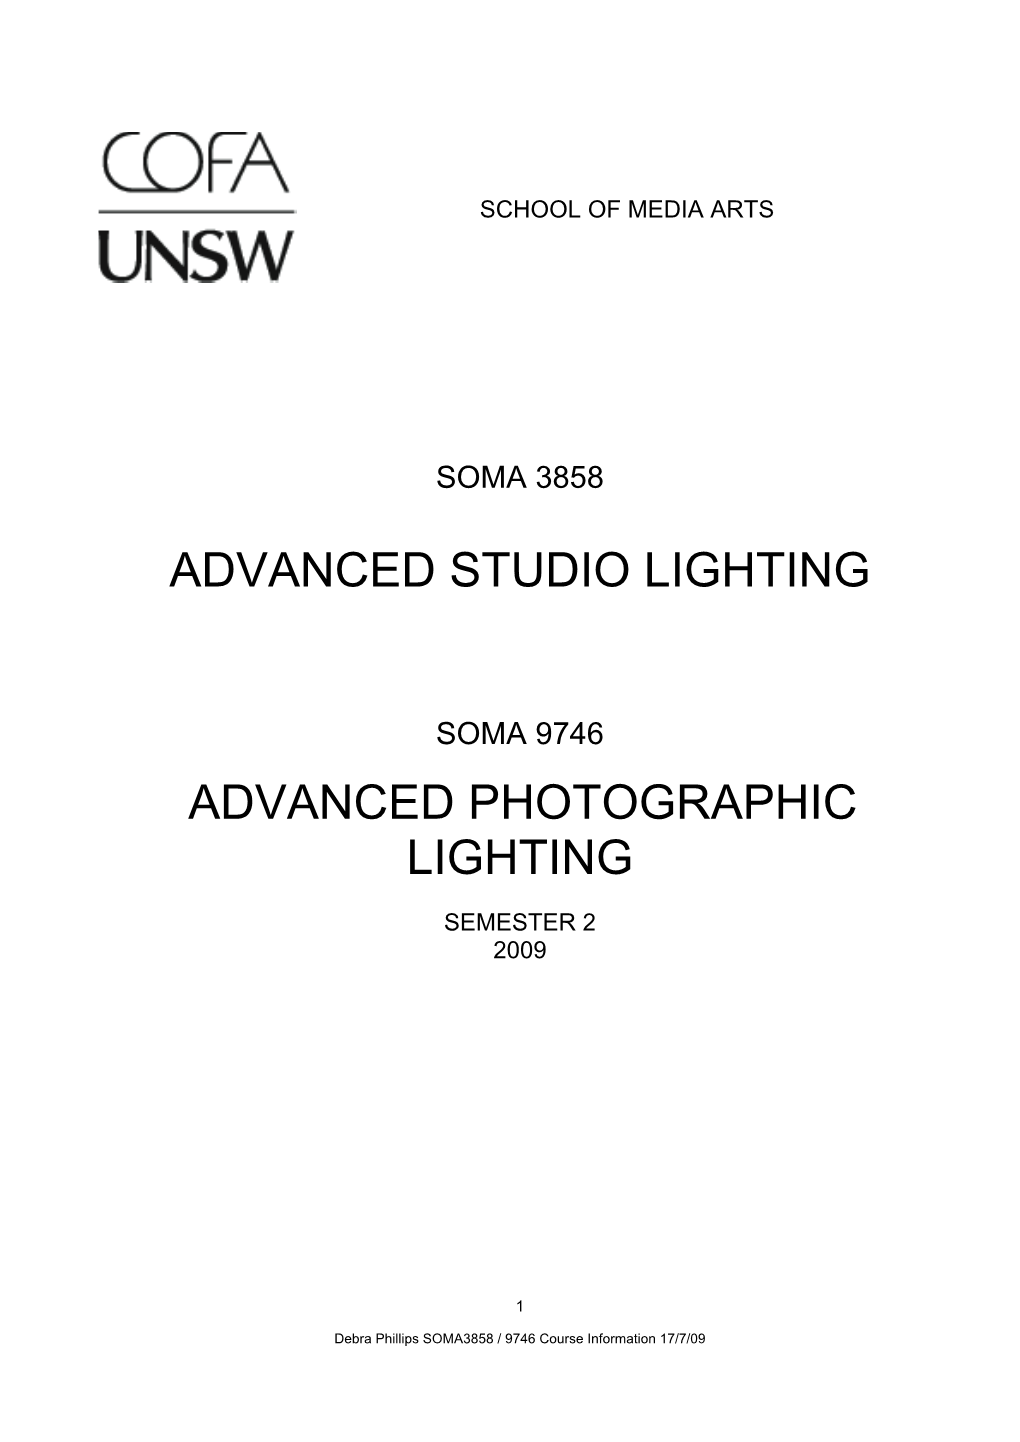 Advanced Studio Lighting Advanced Photographic